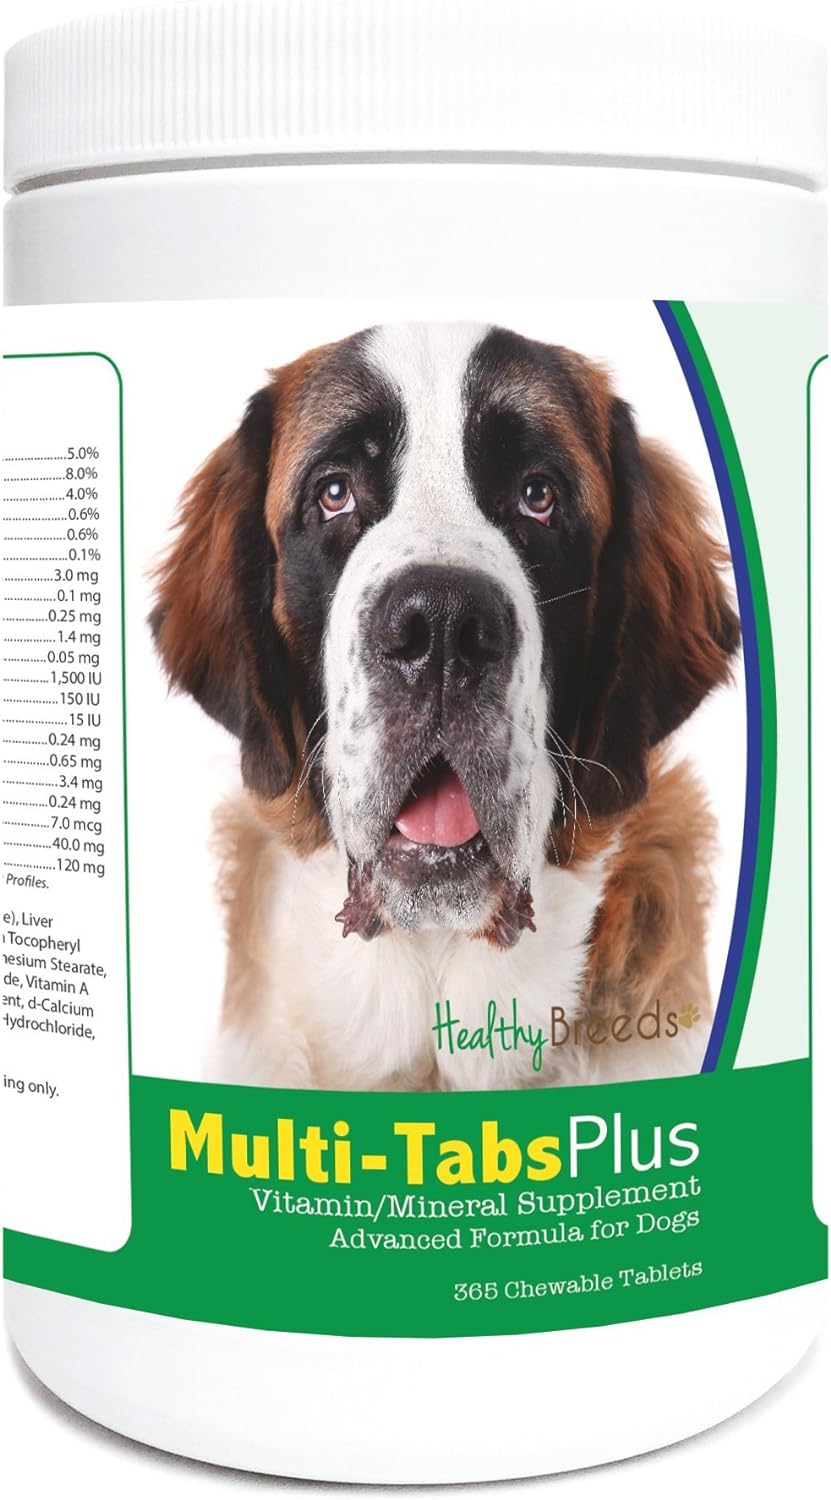 Healthy Breeds Saint Bernard Multi-Tabs Plus Chewable Tablets 365 Count : Pet Supplies